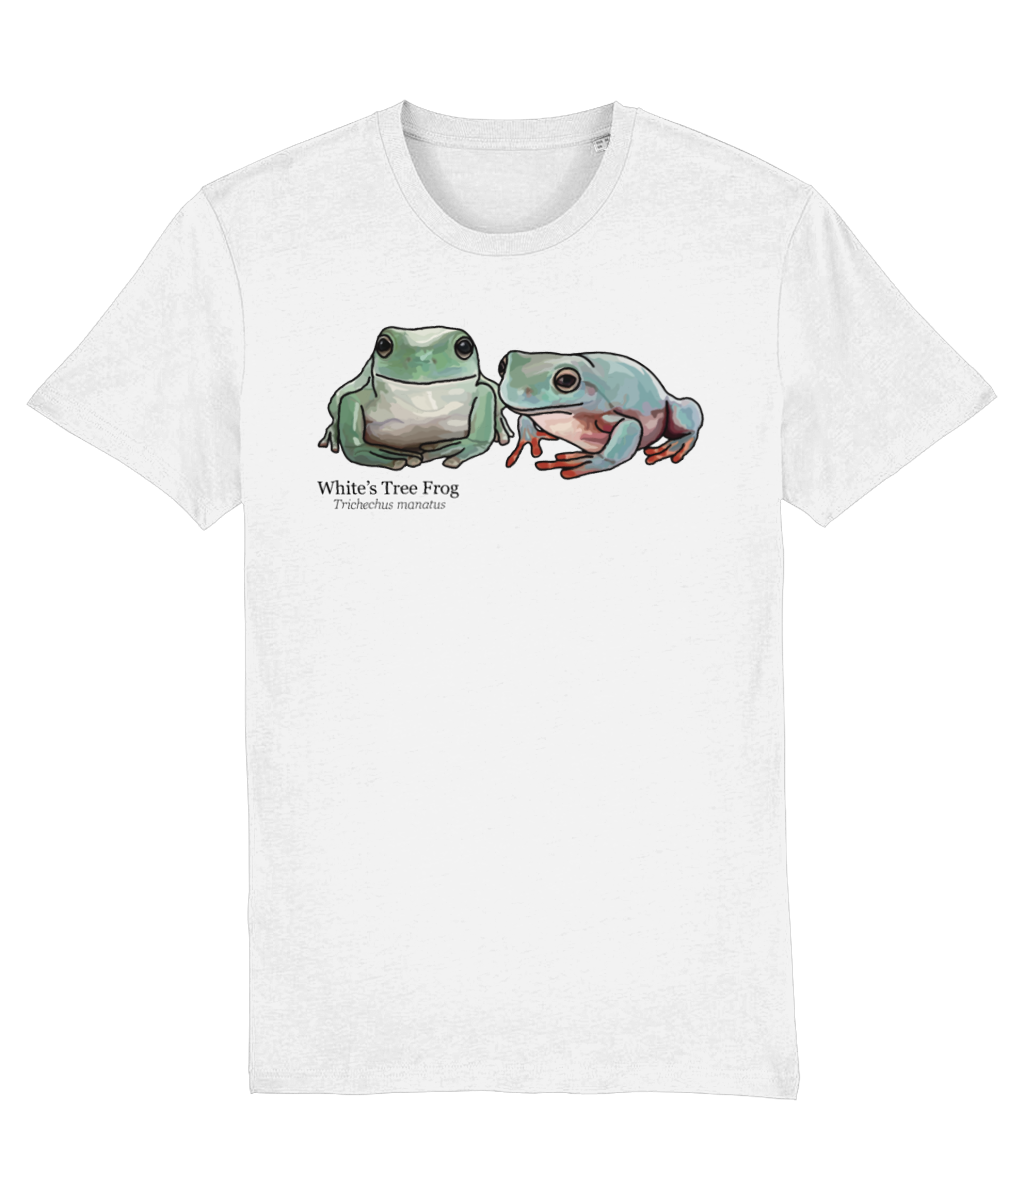 White's Tree Frog Charity T-Shirt